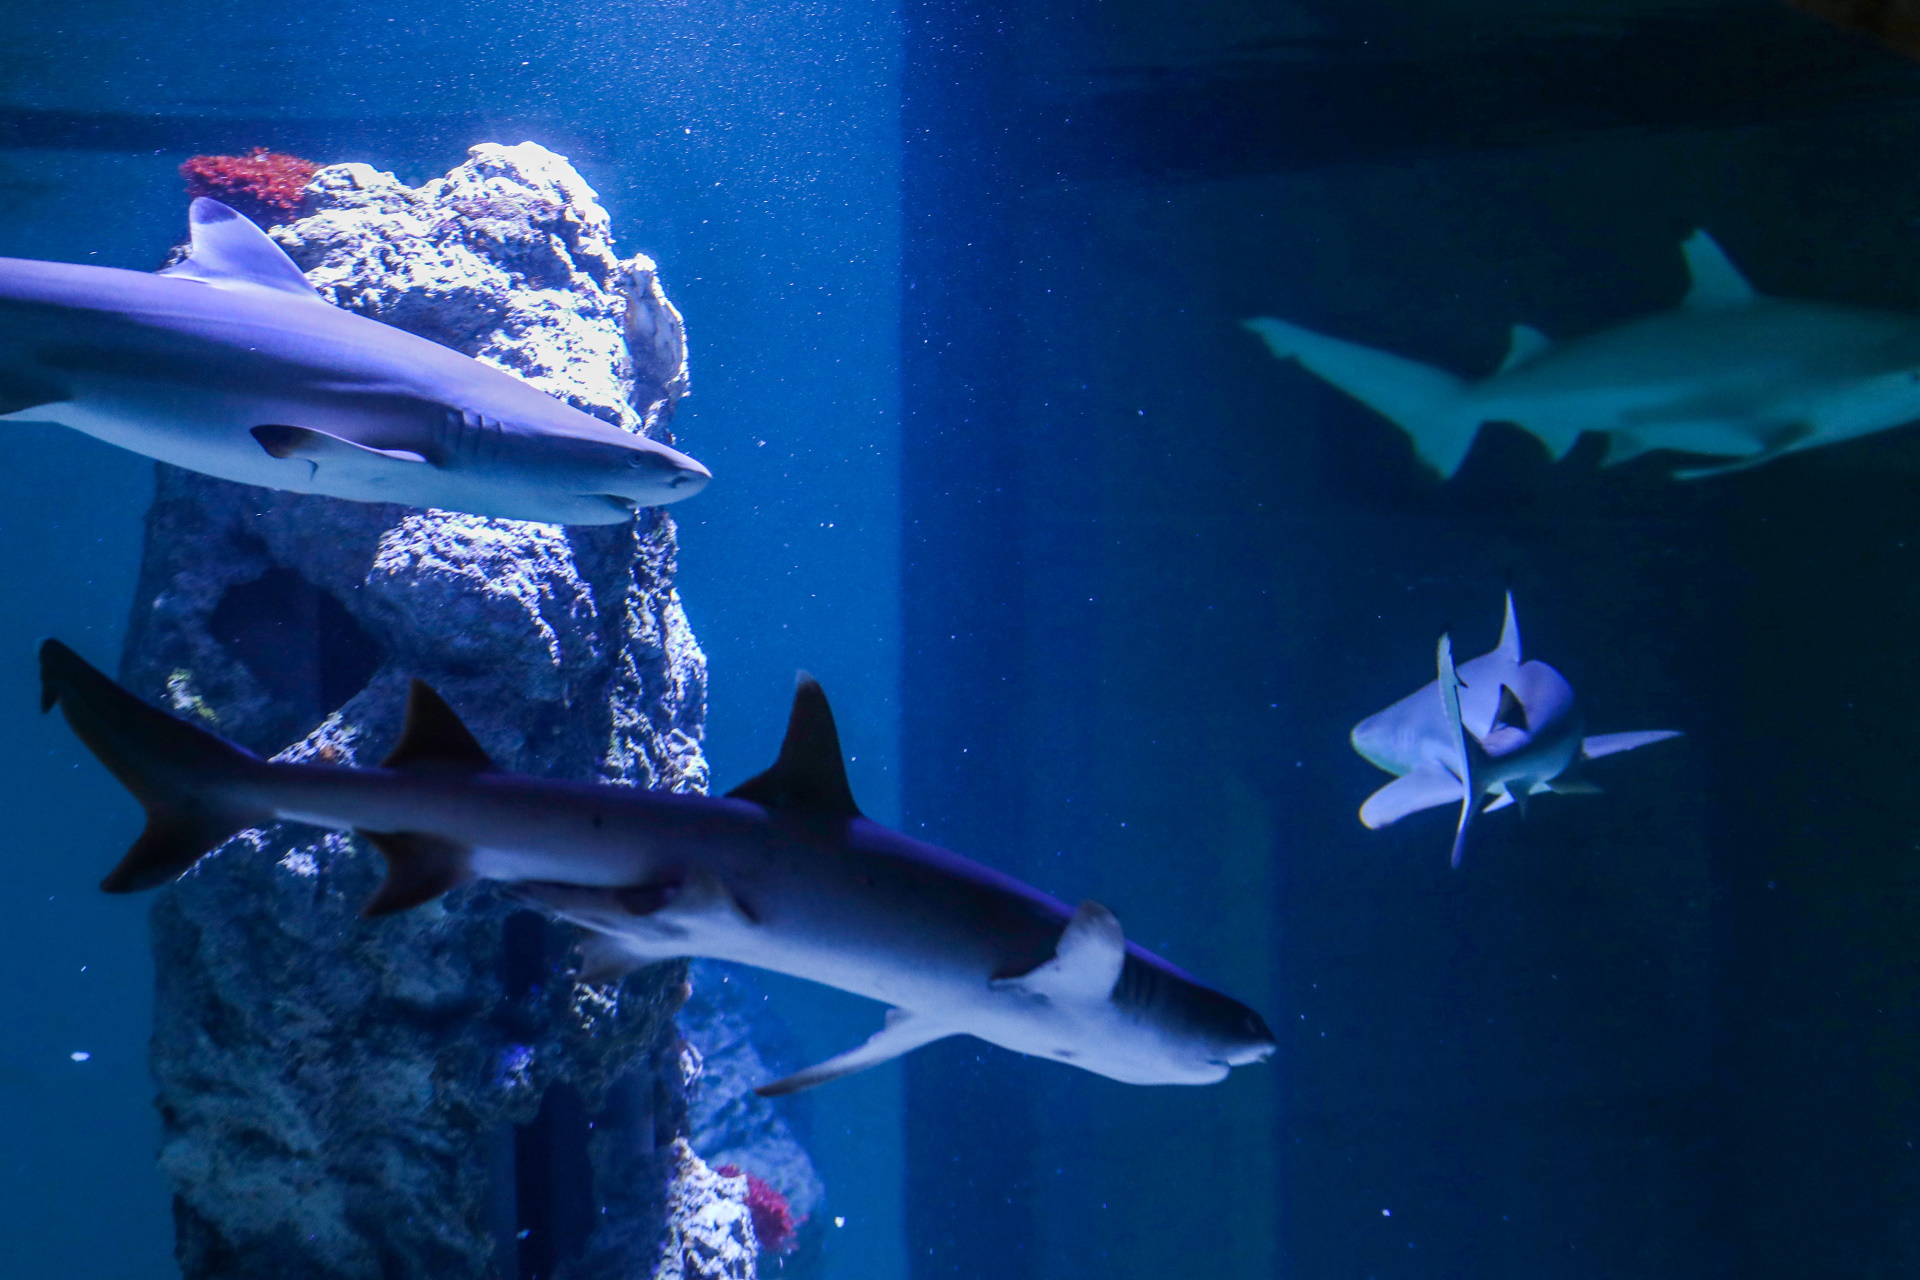 19.05.2021., Pula - Aquarium Pula. Akvarij s morskim psima .
Photo: Srecko Niketic/PIXSELL